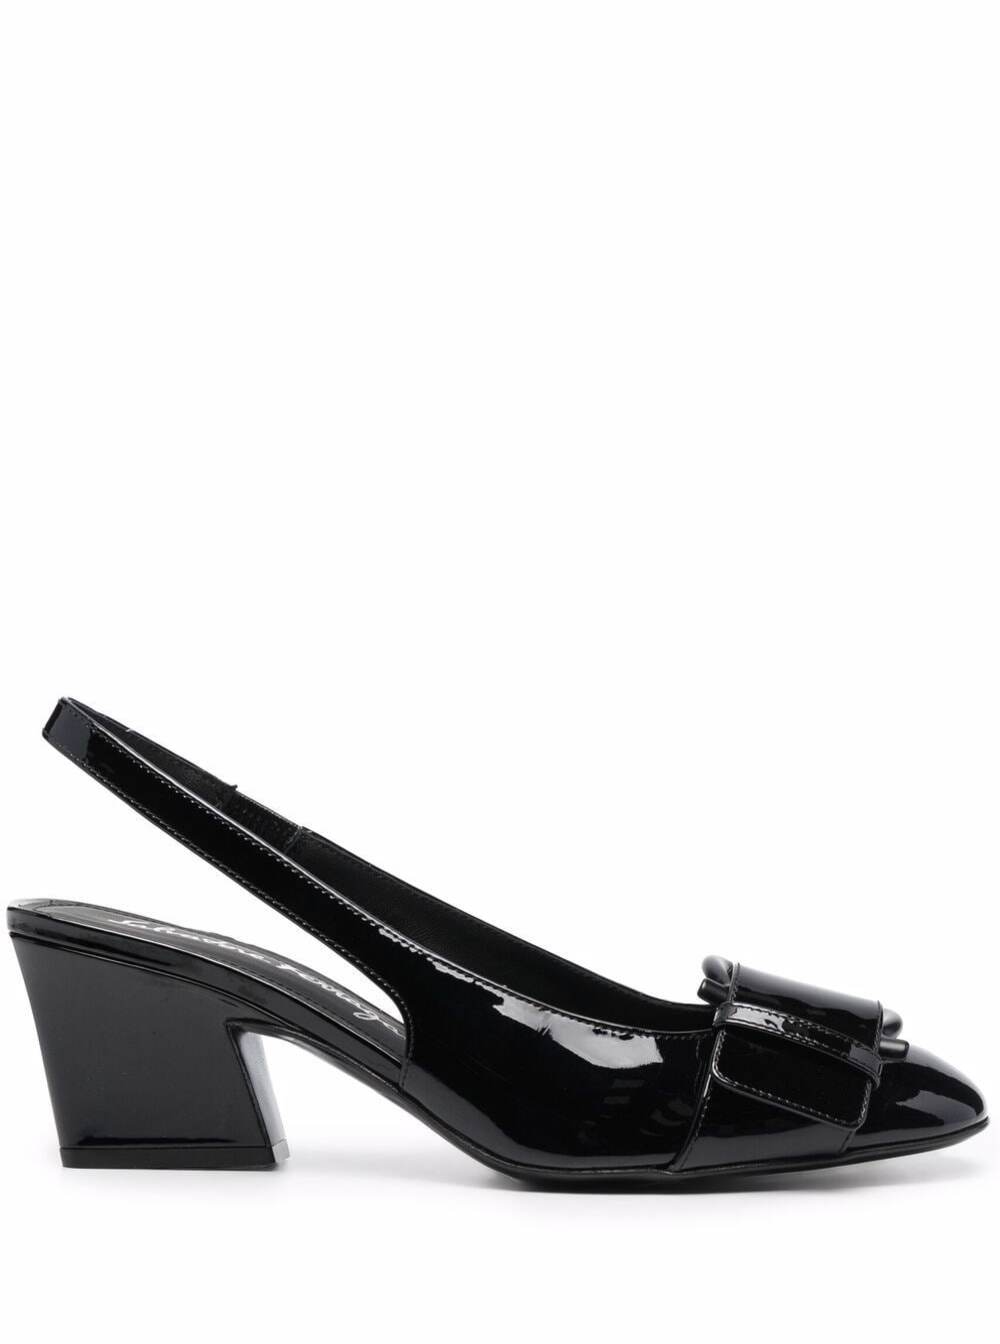 Salvatore Ferragamo Womans Briget Black Patent Leather Sandals